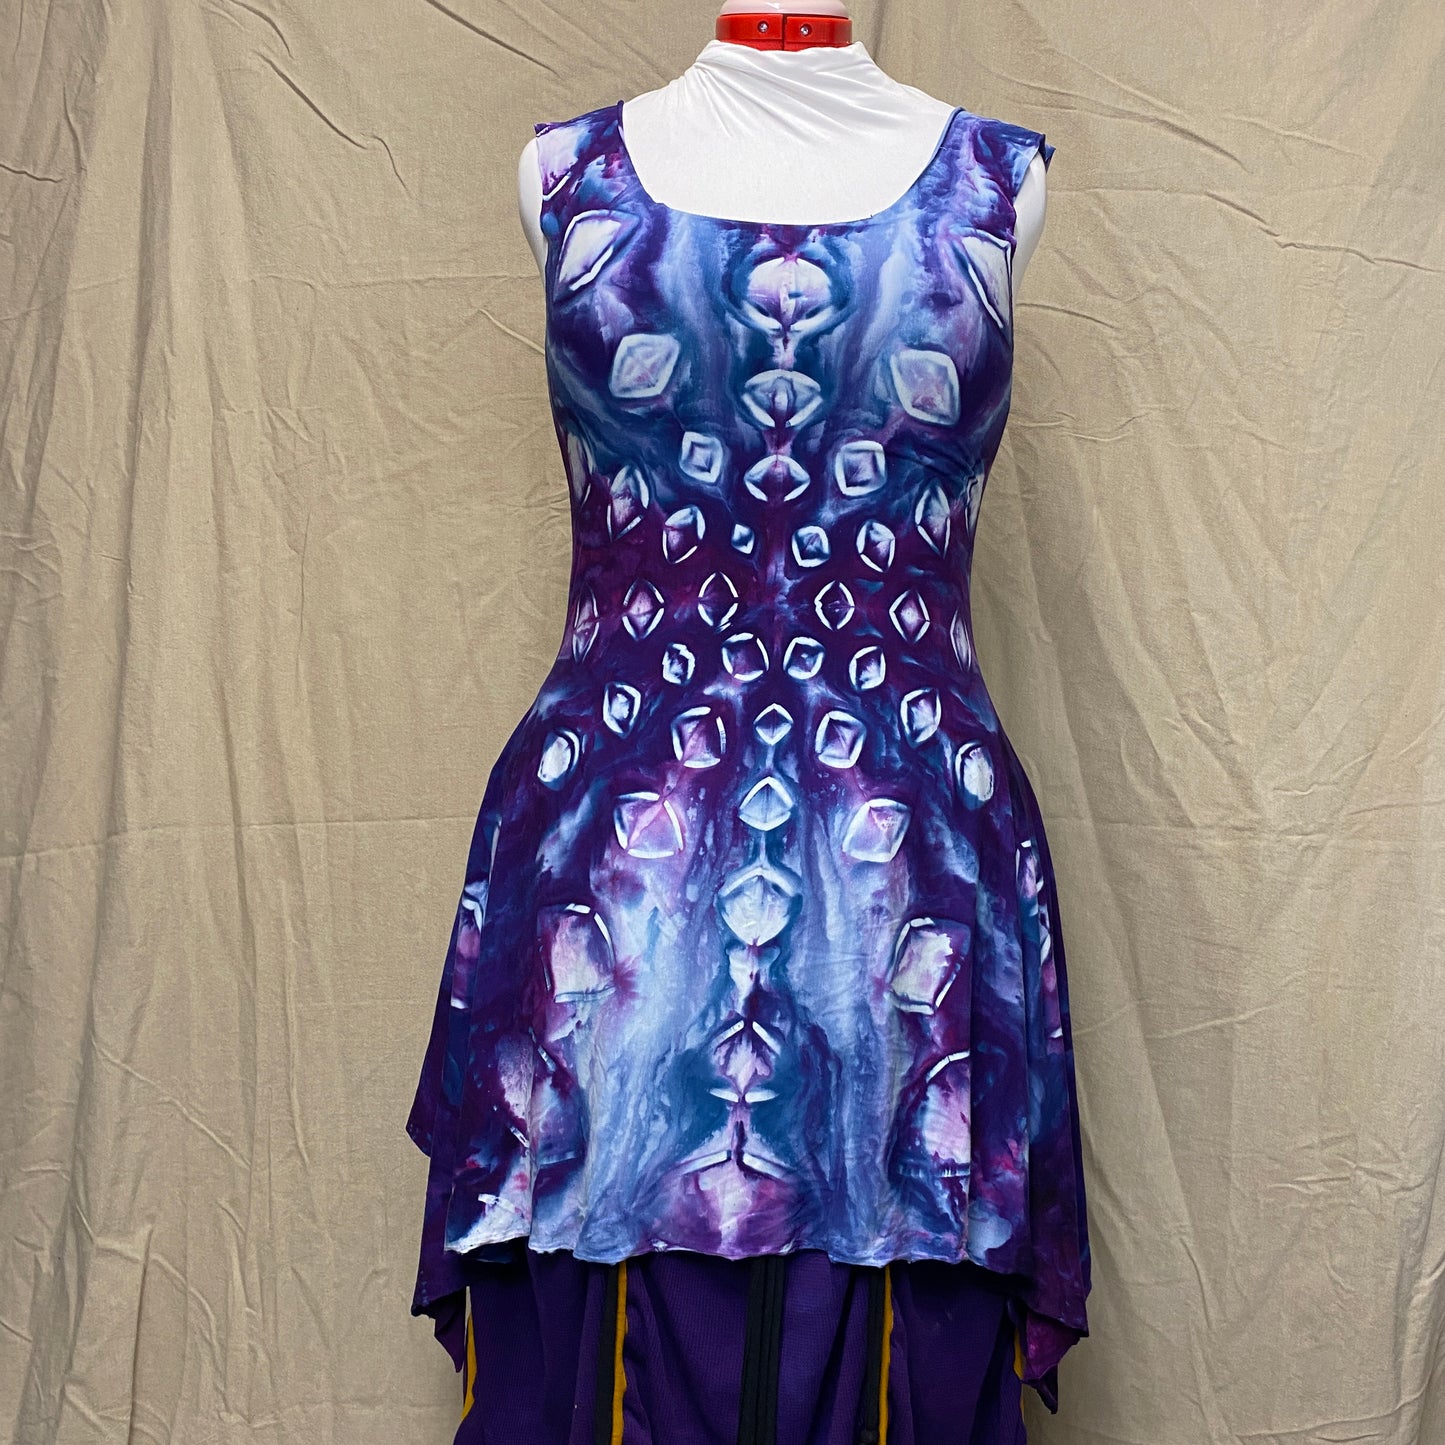 MTO- Aquarius Dress with Melted Mandala Design